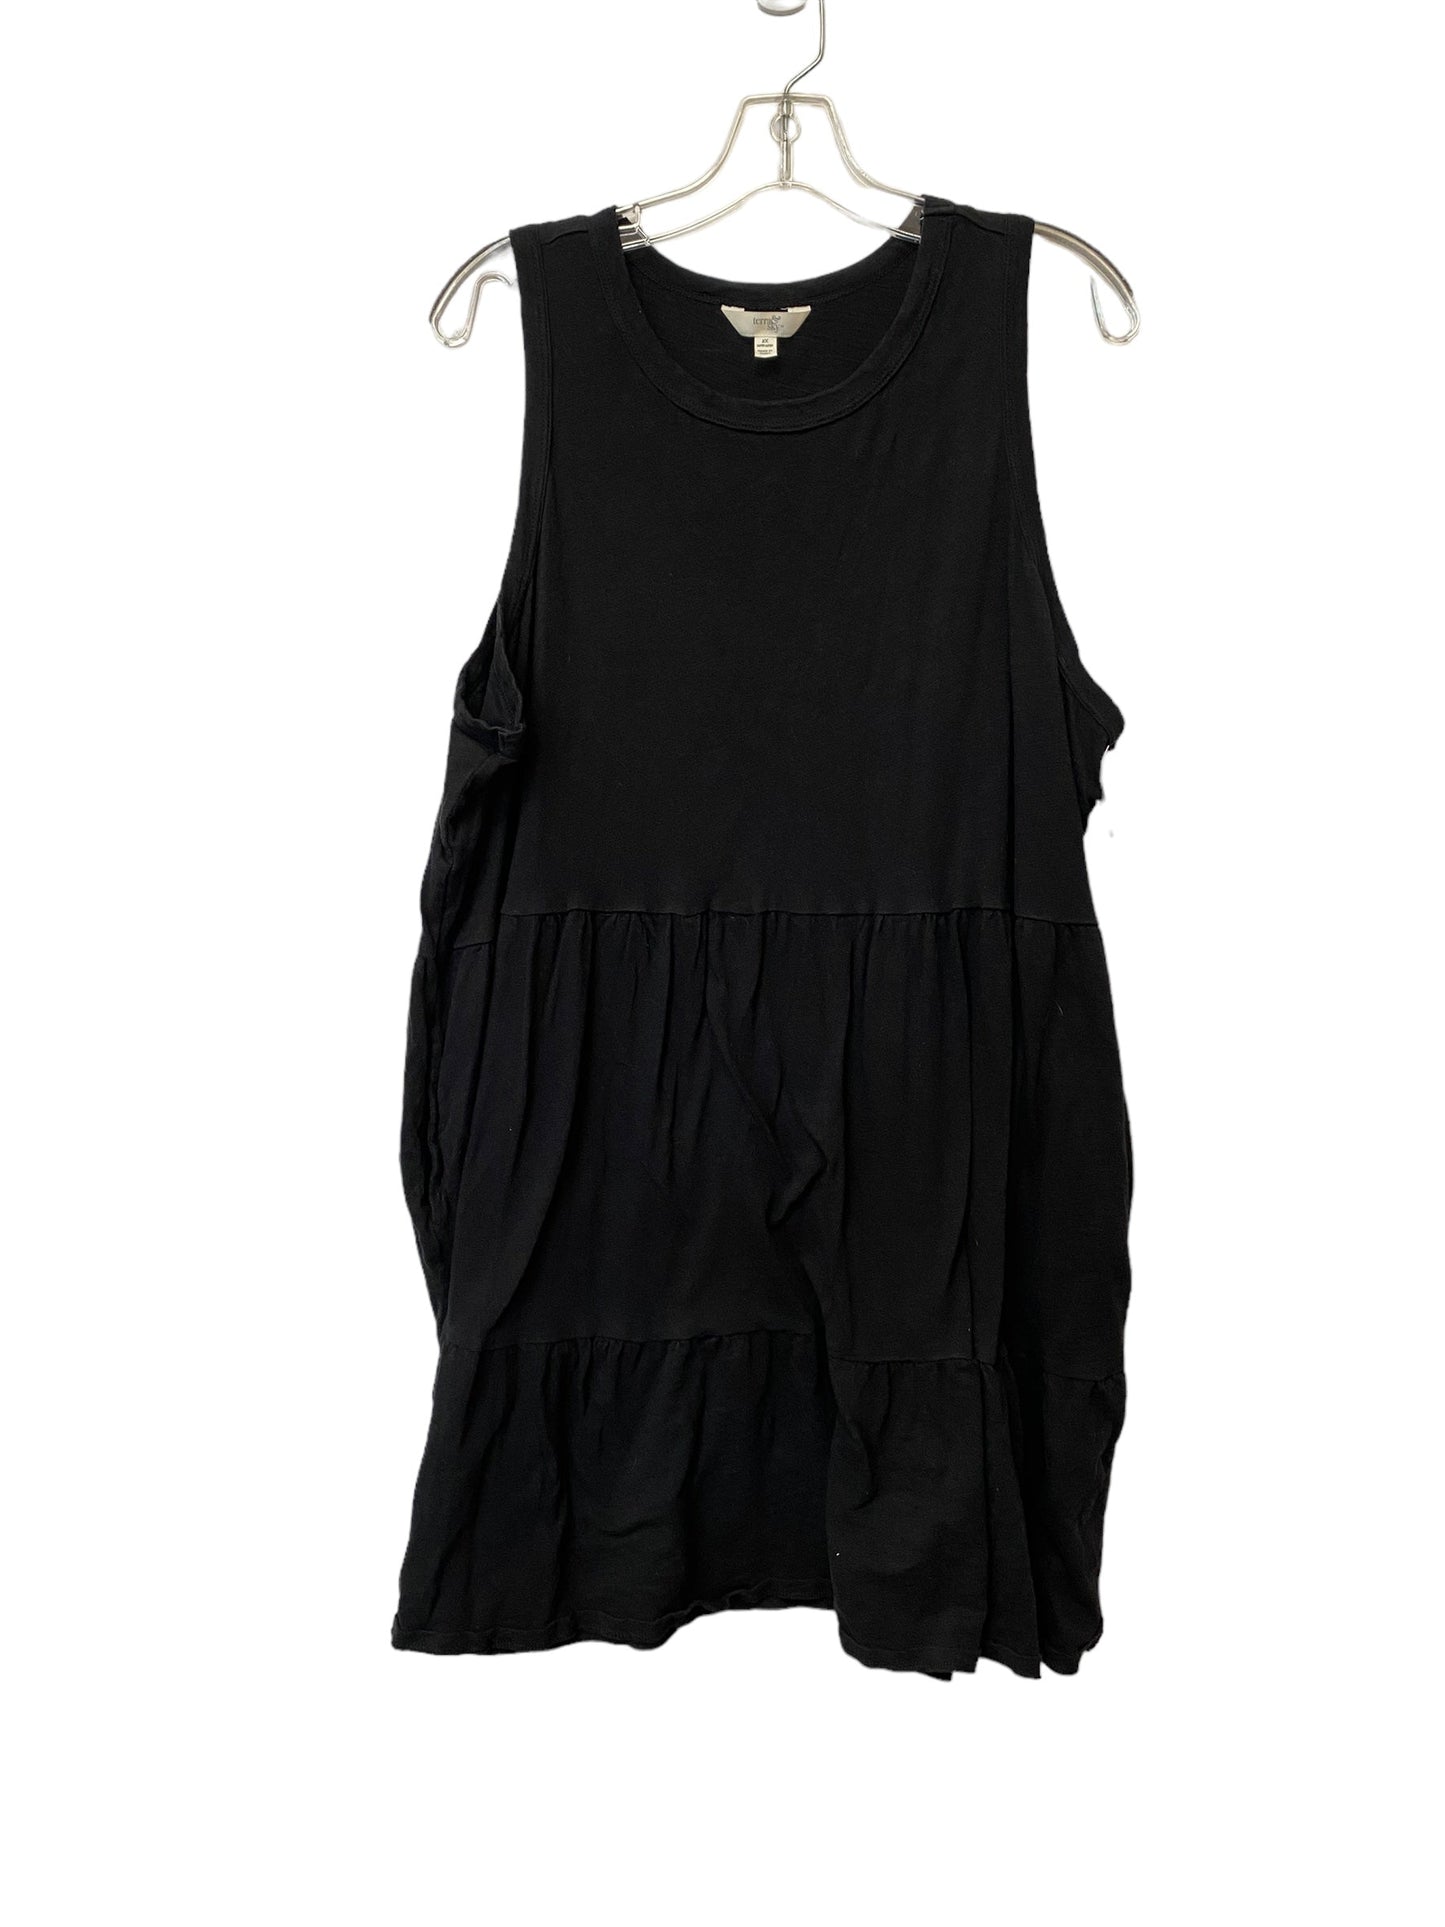 Black Dress Casual Short Terra & Sky, Size 2x